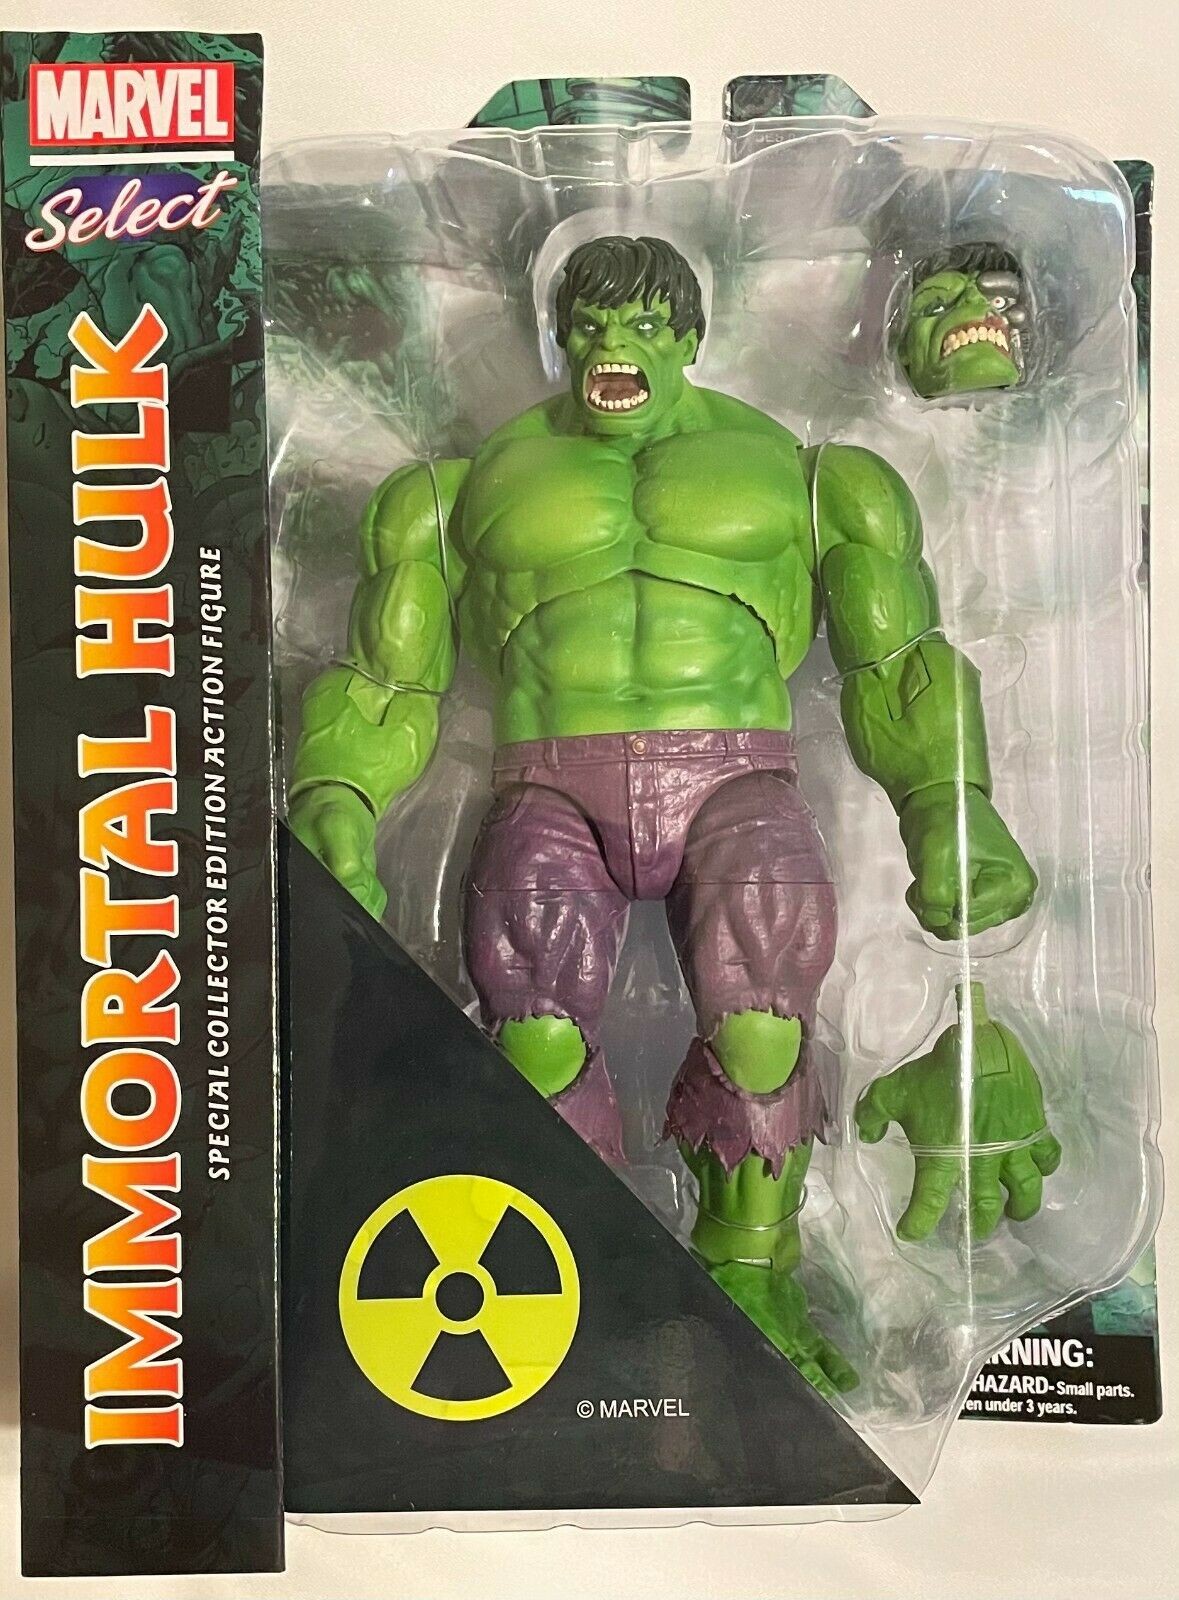 REPERE GEEK - figurine hulk immortal af marvel select